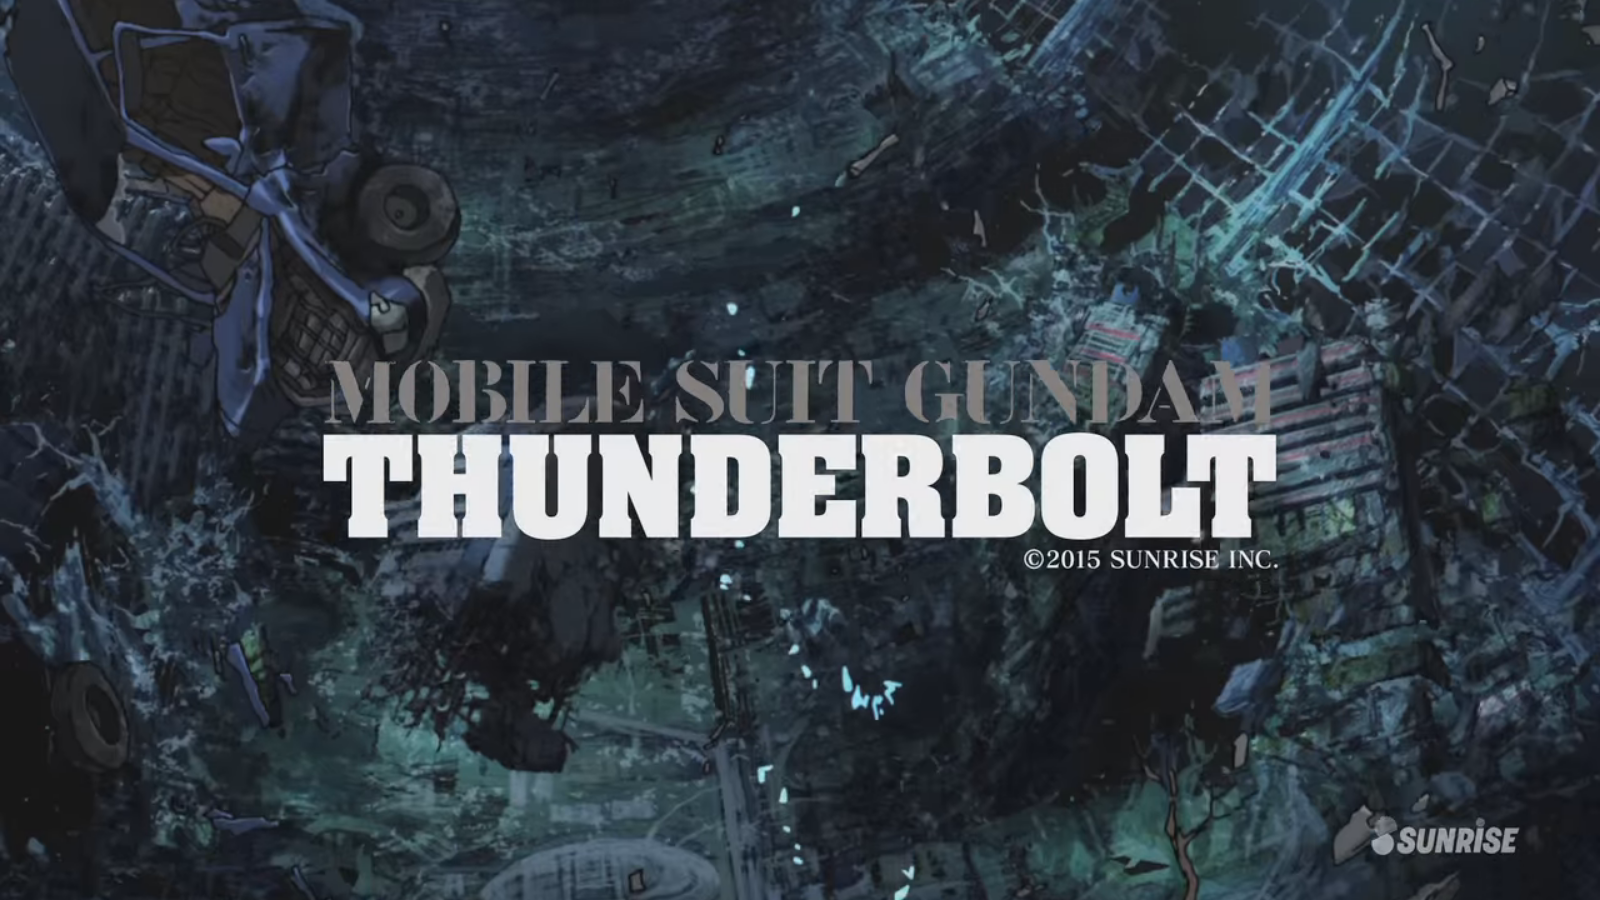 Art And Musings Of A Miniature Hobbyist Anime Review Mobile Suit Gundam Thunderbolt 機動戦士ガンダム サンダーボルト Kidō Senshi Gandamu Sandaboruto